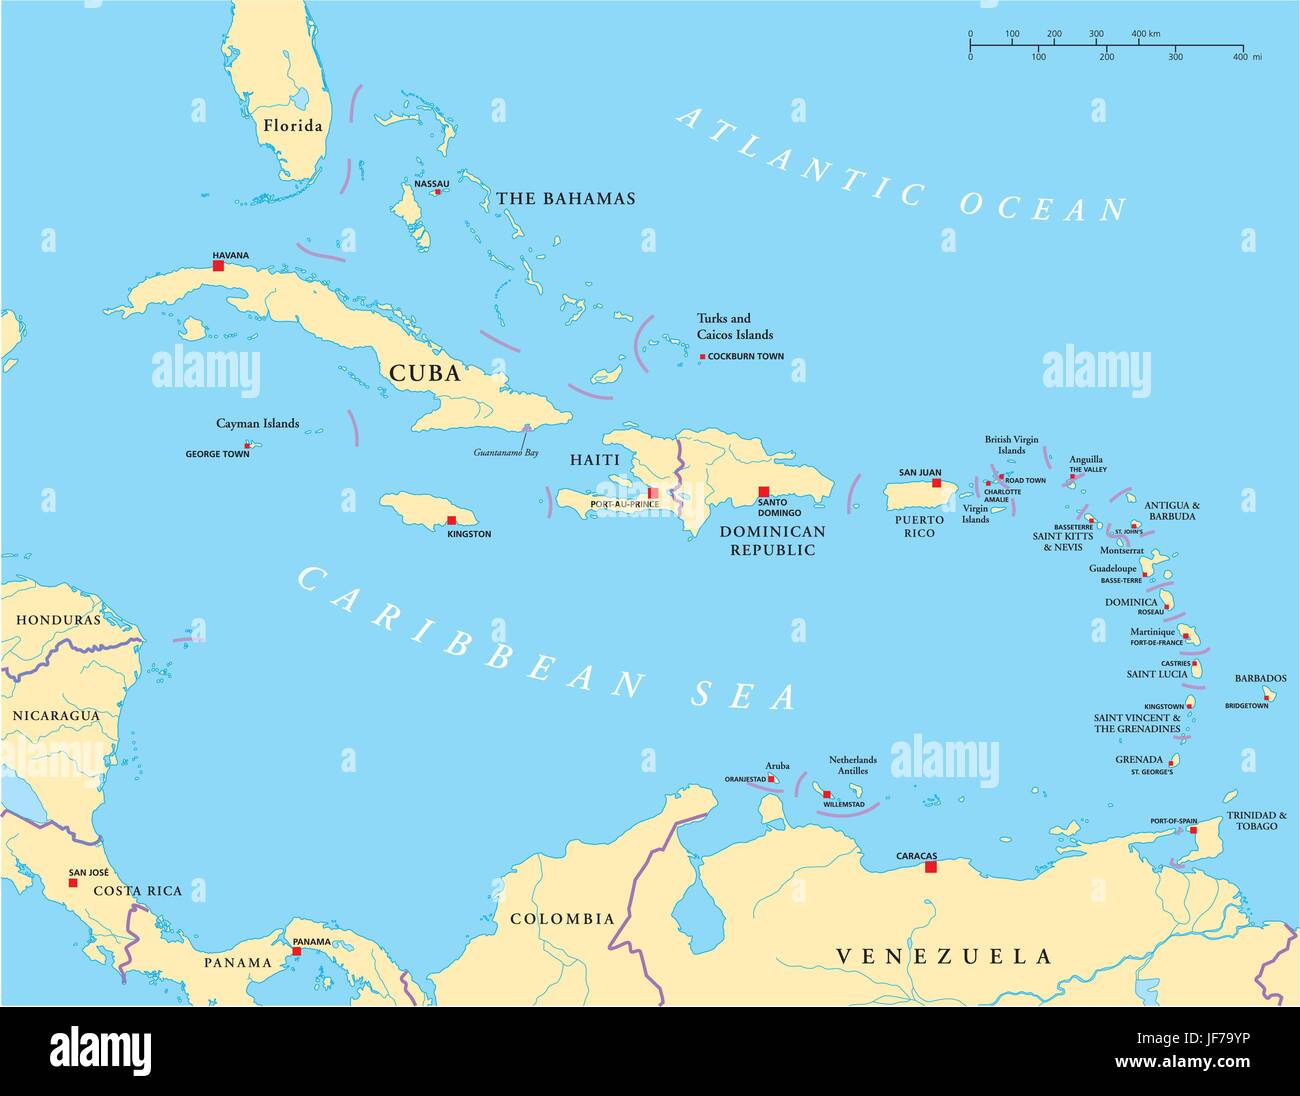 Cuba Antilles Caribbean Map Atlas Map Of The World Grenada